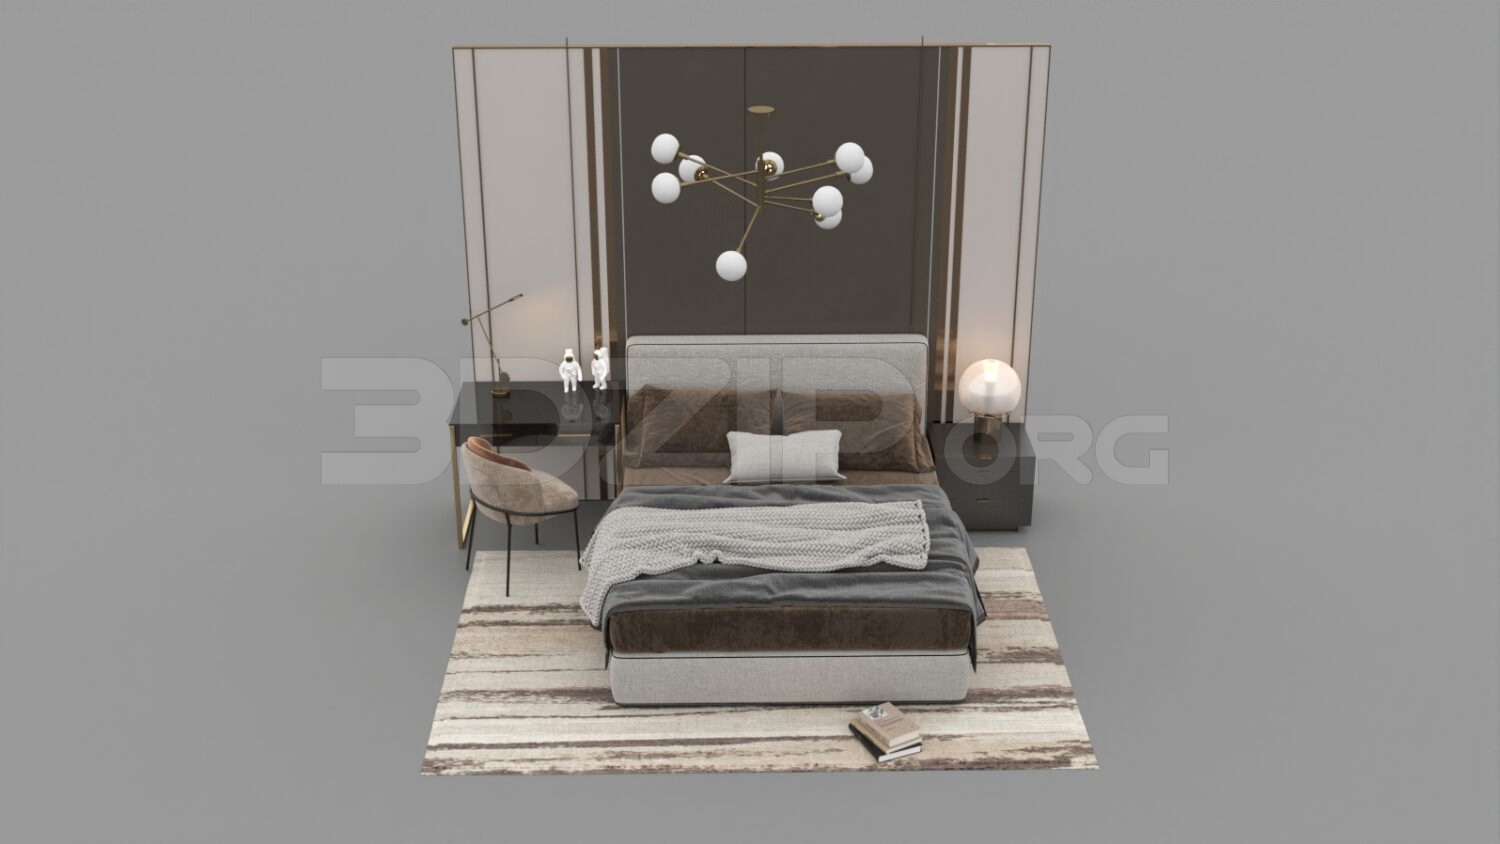 2630. Free 3D Bed Model Download